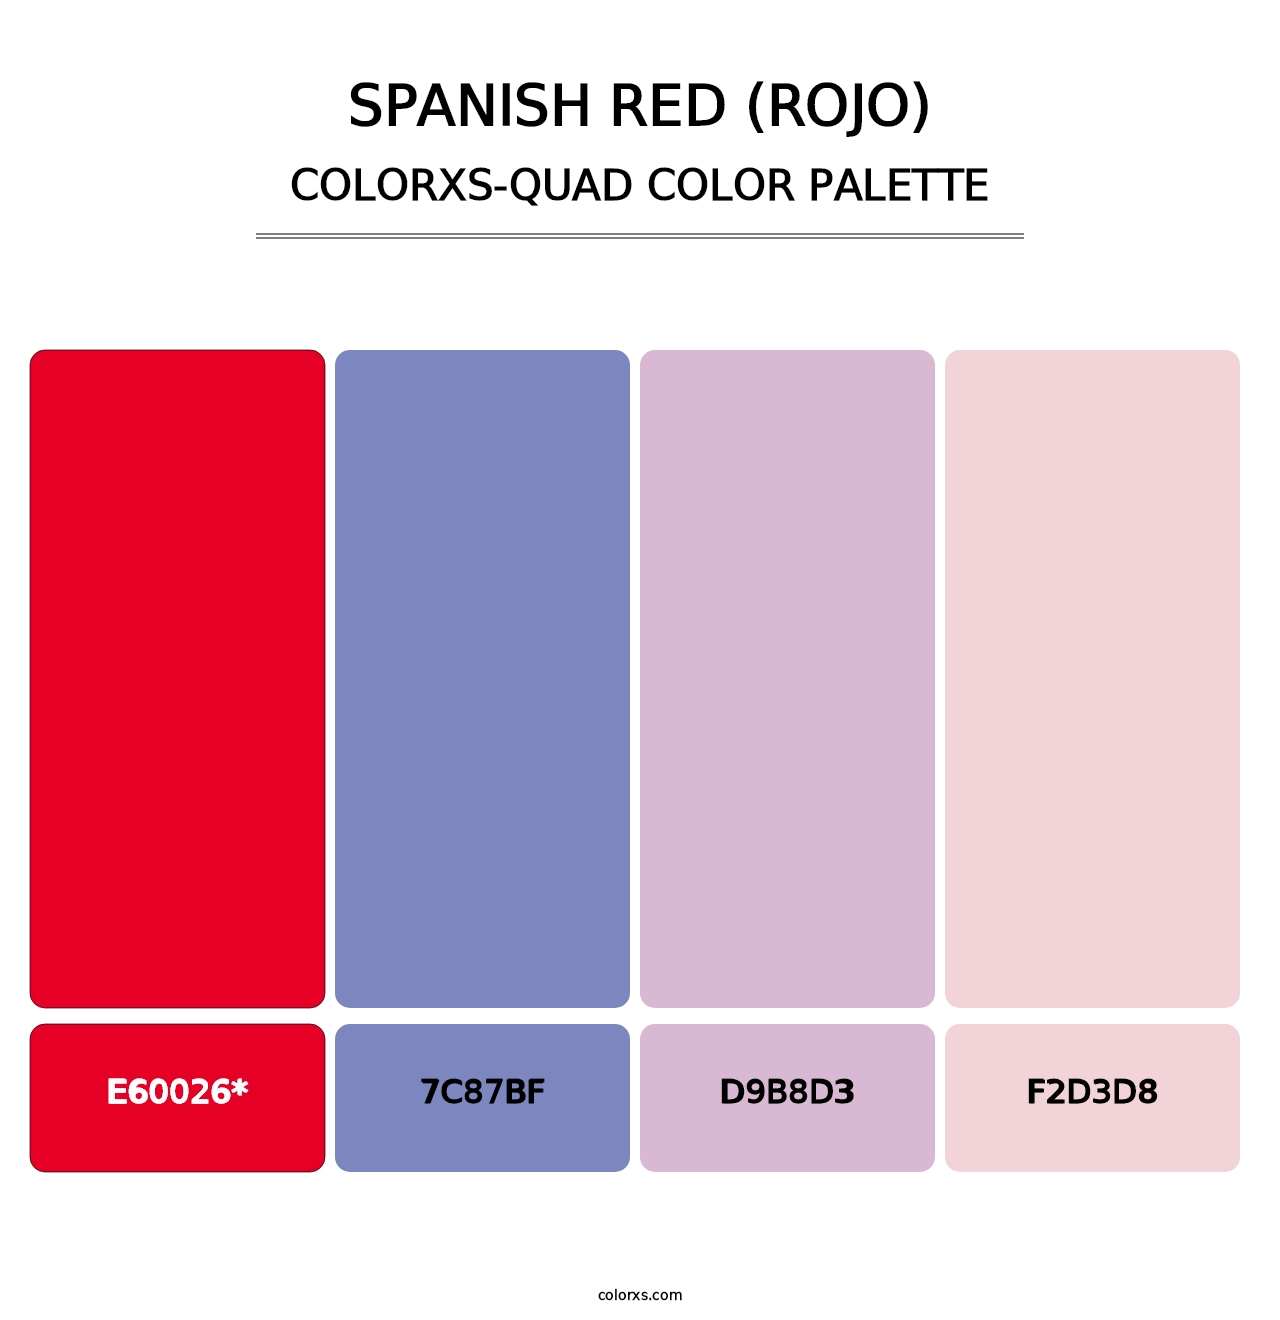 Spanish Red (Rojo) - Colorxs Quad Palette